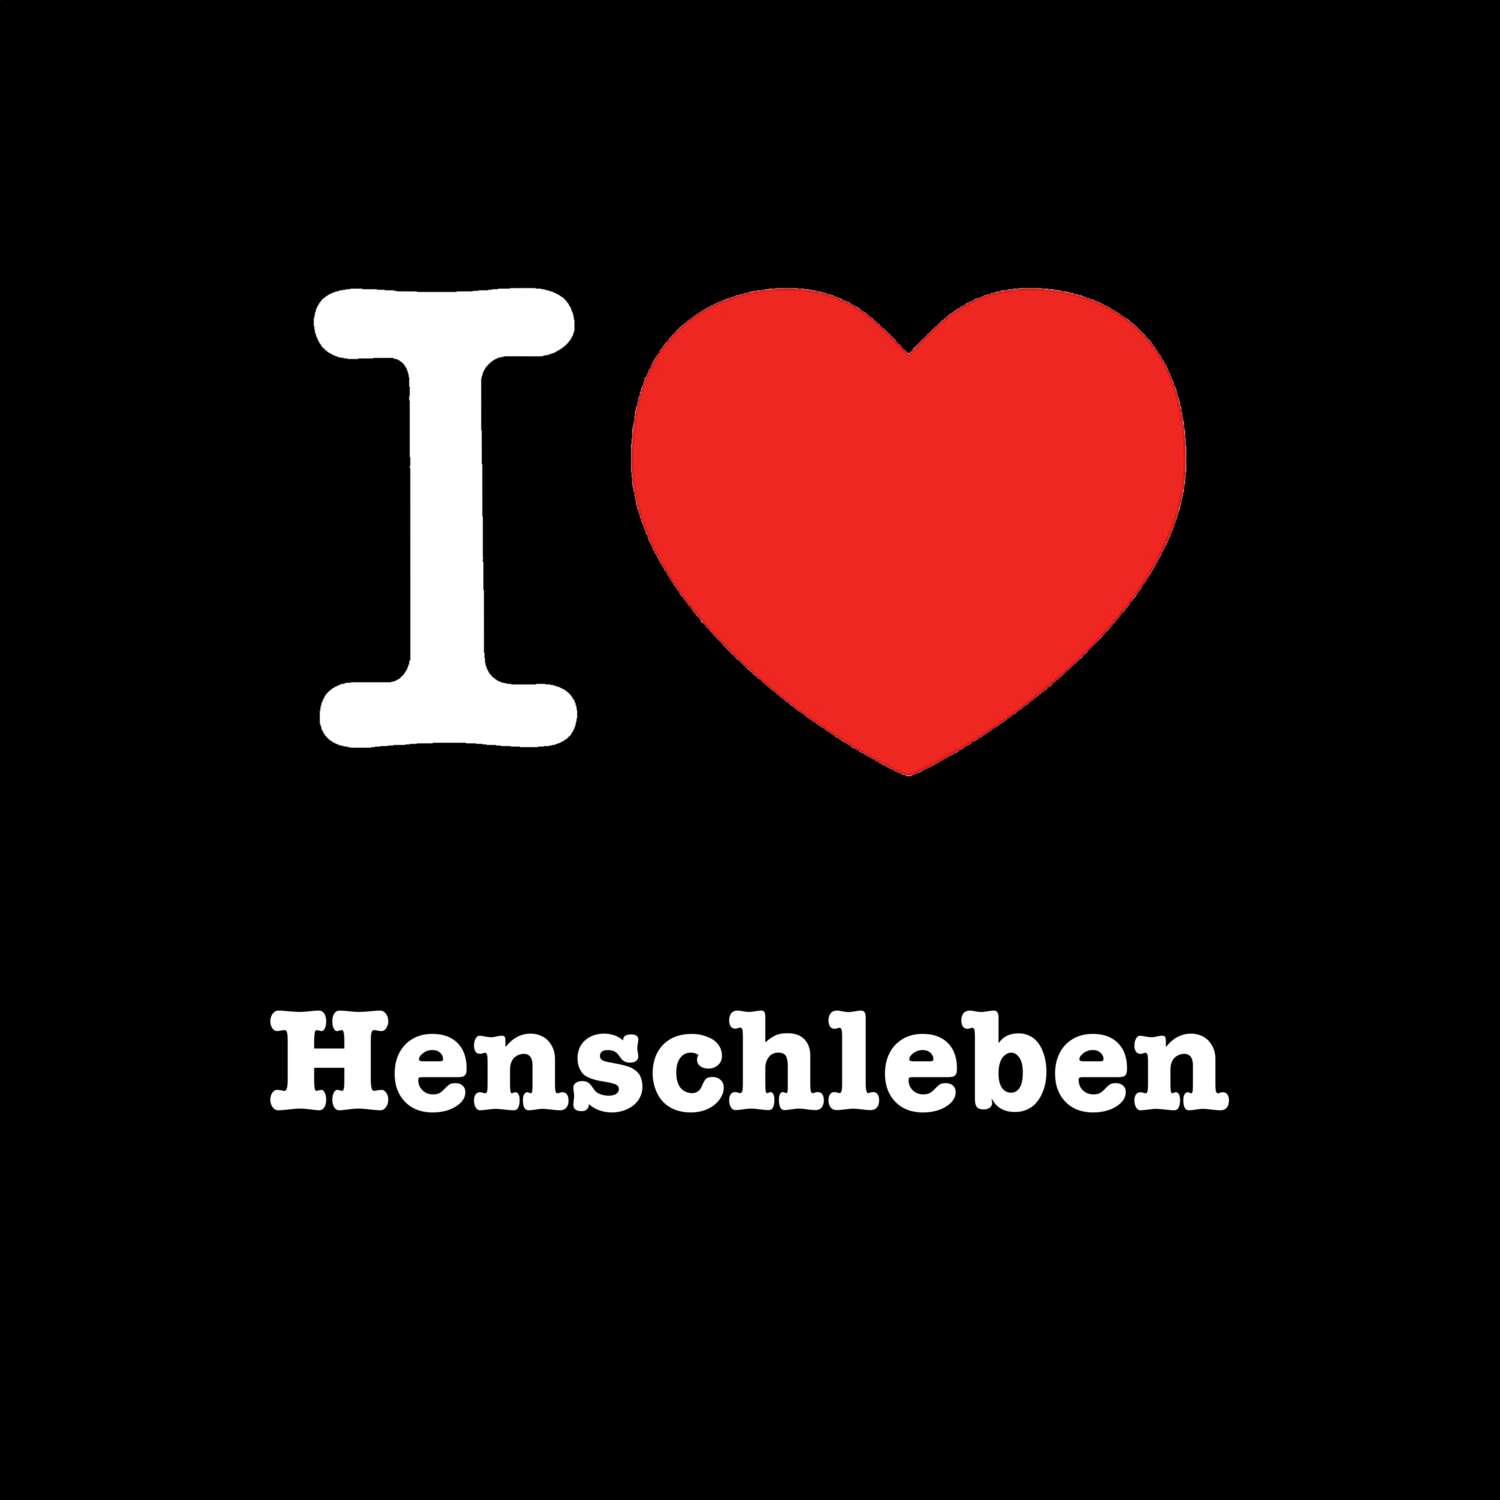 Henschleben T-Shirt »I love«